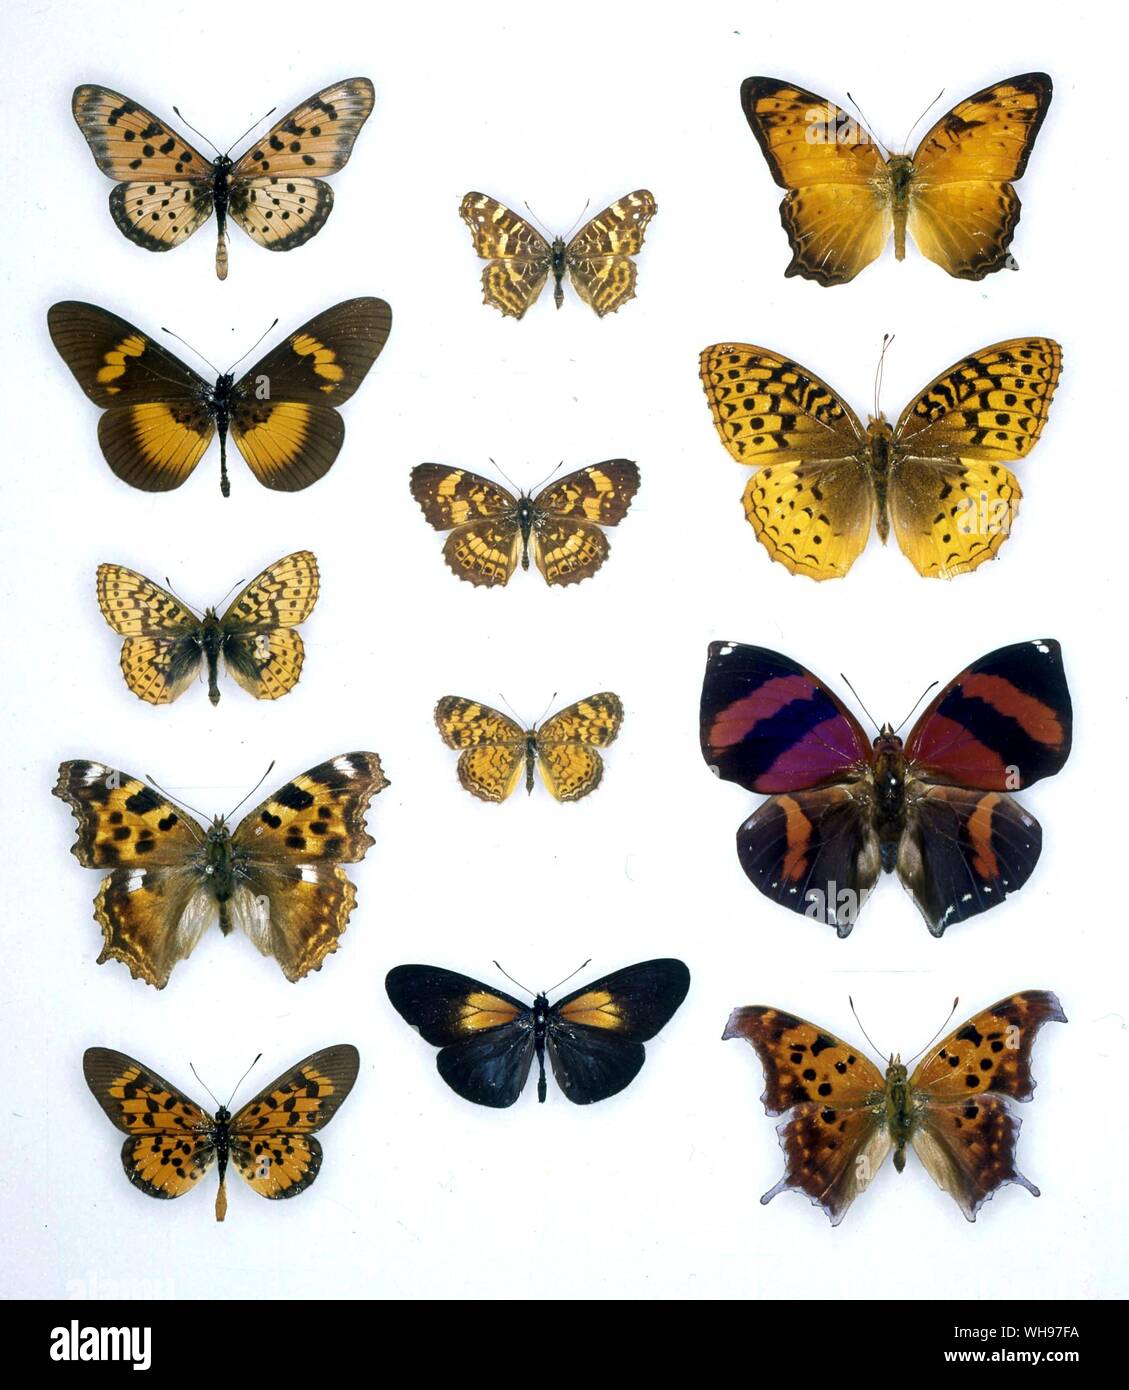 Butterflies/moths - (top left to bottom) Acraea chilo, Bematistes aganice, Clossiana frigga, Nymphalis vau-album, Acaea cephus - (middle row top to bottom) Araschnia levana, Chlorosyne nycteis, Physiodes tharos, Actinote ozomene - (top right to bottom) Vagrans egista, Speyeria cybele, Siderone galanthis, Polygonia interrogationis Stock Photo